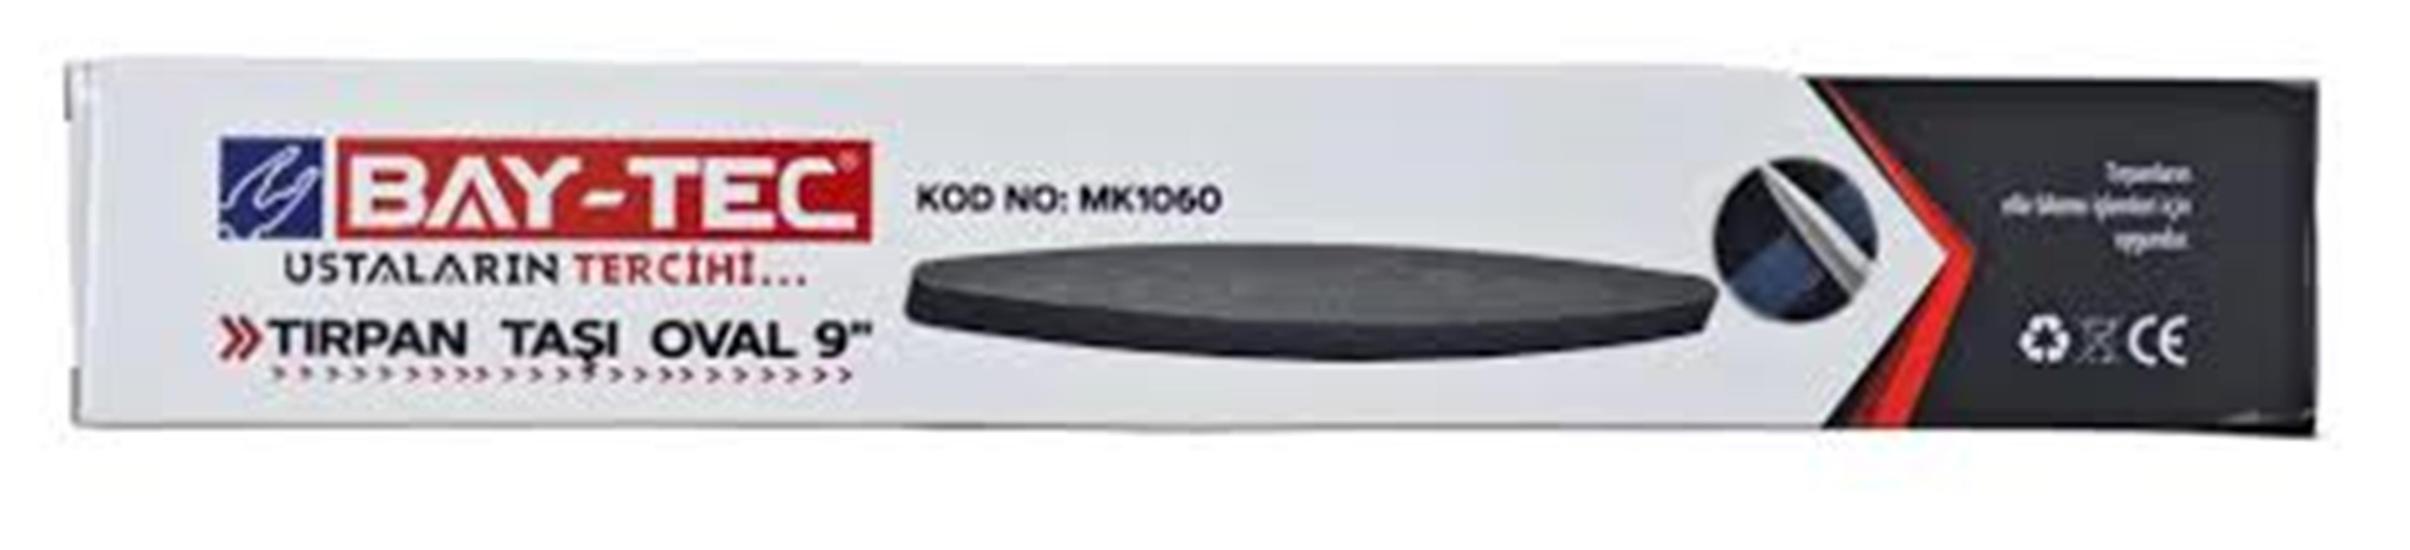 Bay-Tec Tırpan Taşı Oval MK-1060